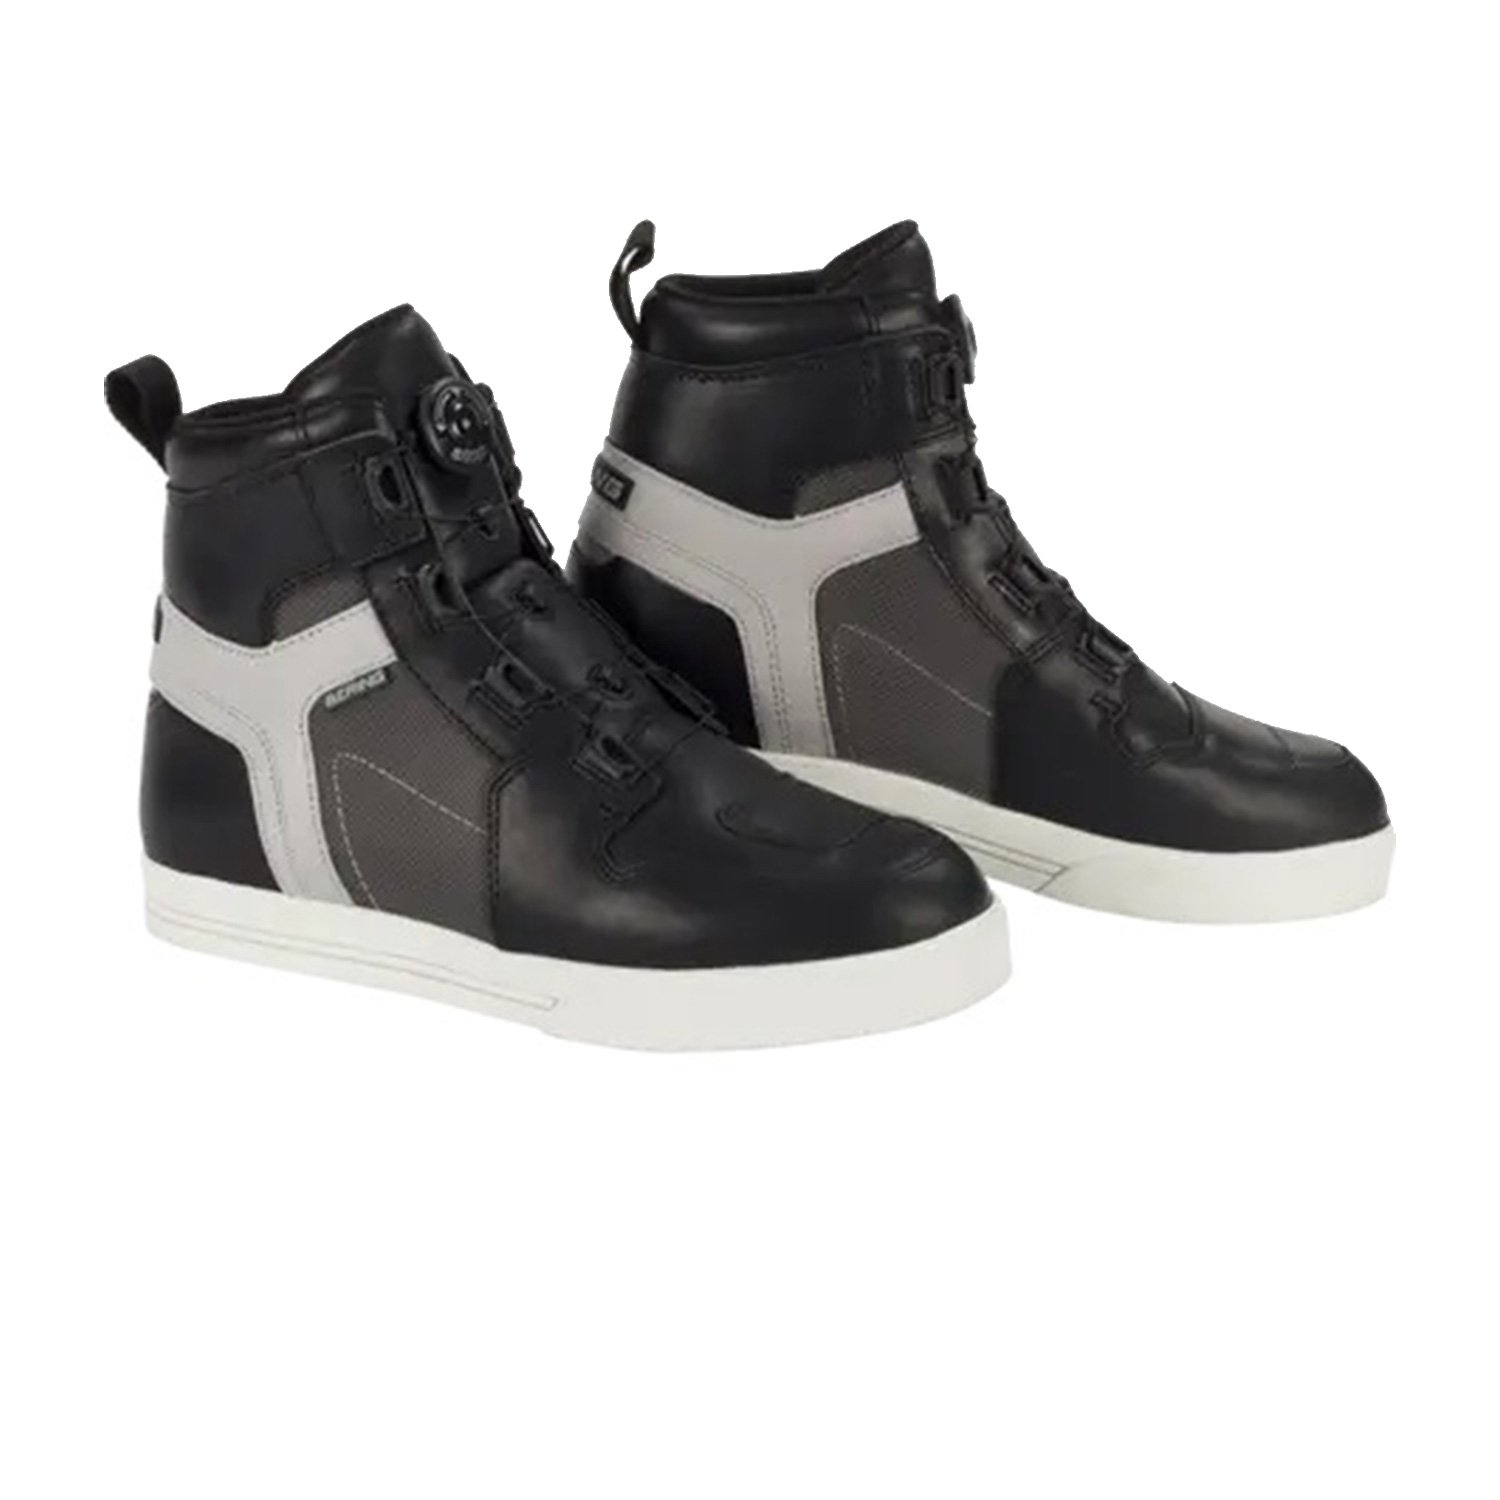 Image of Bering Sneakers Reflex Vented Black Grey Size 40 EN